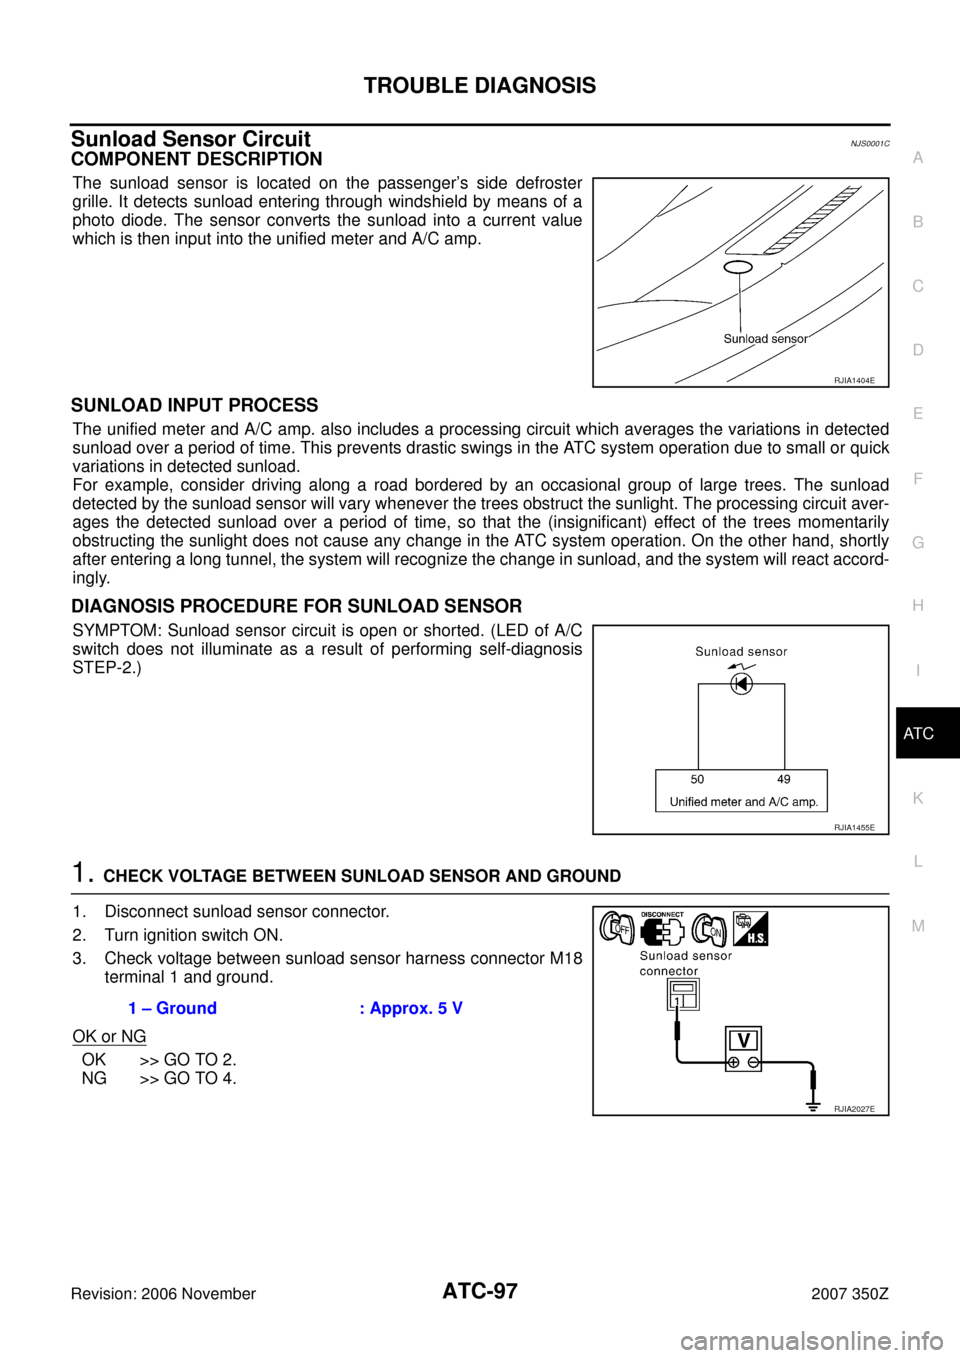 NISSAN 350Z 2007 Z33 Automatic Air Conditioner Workshop Manual TROUBLE DIAGNOSIS
ATC-97
C
D
E
F
G
H
I
K
L
MA
B
AT C
Revision: 2006 November2007 350Z
Sunload Sensor CircuitNJS0001C
COMPONENT DESCRIPTION
The sunload sensor is located on the passenger’s side defro